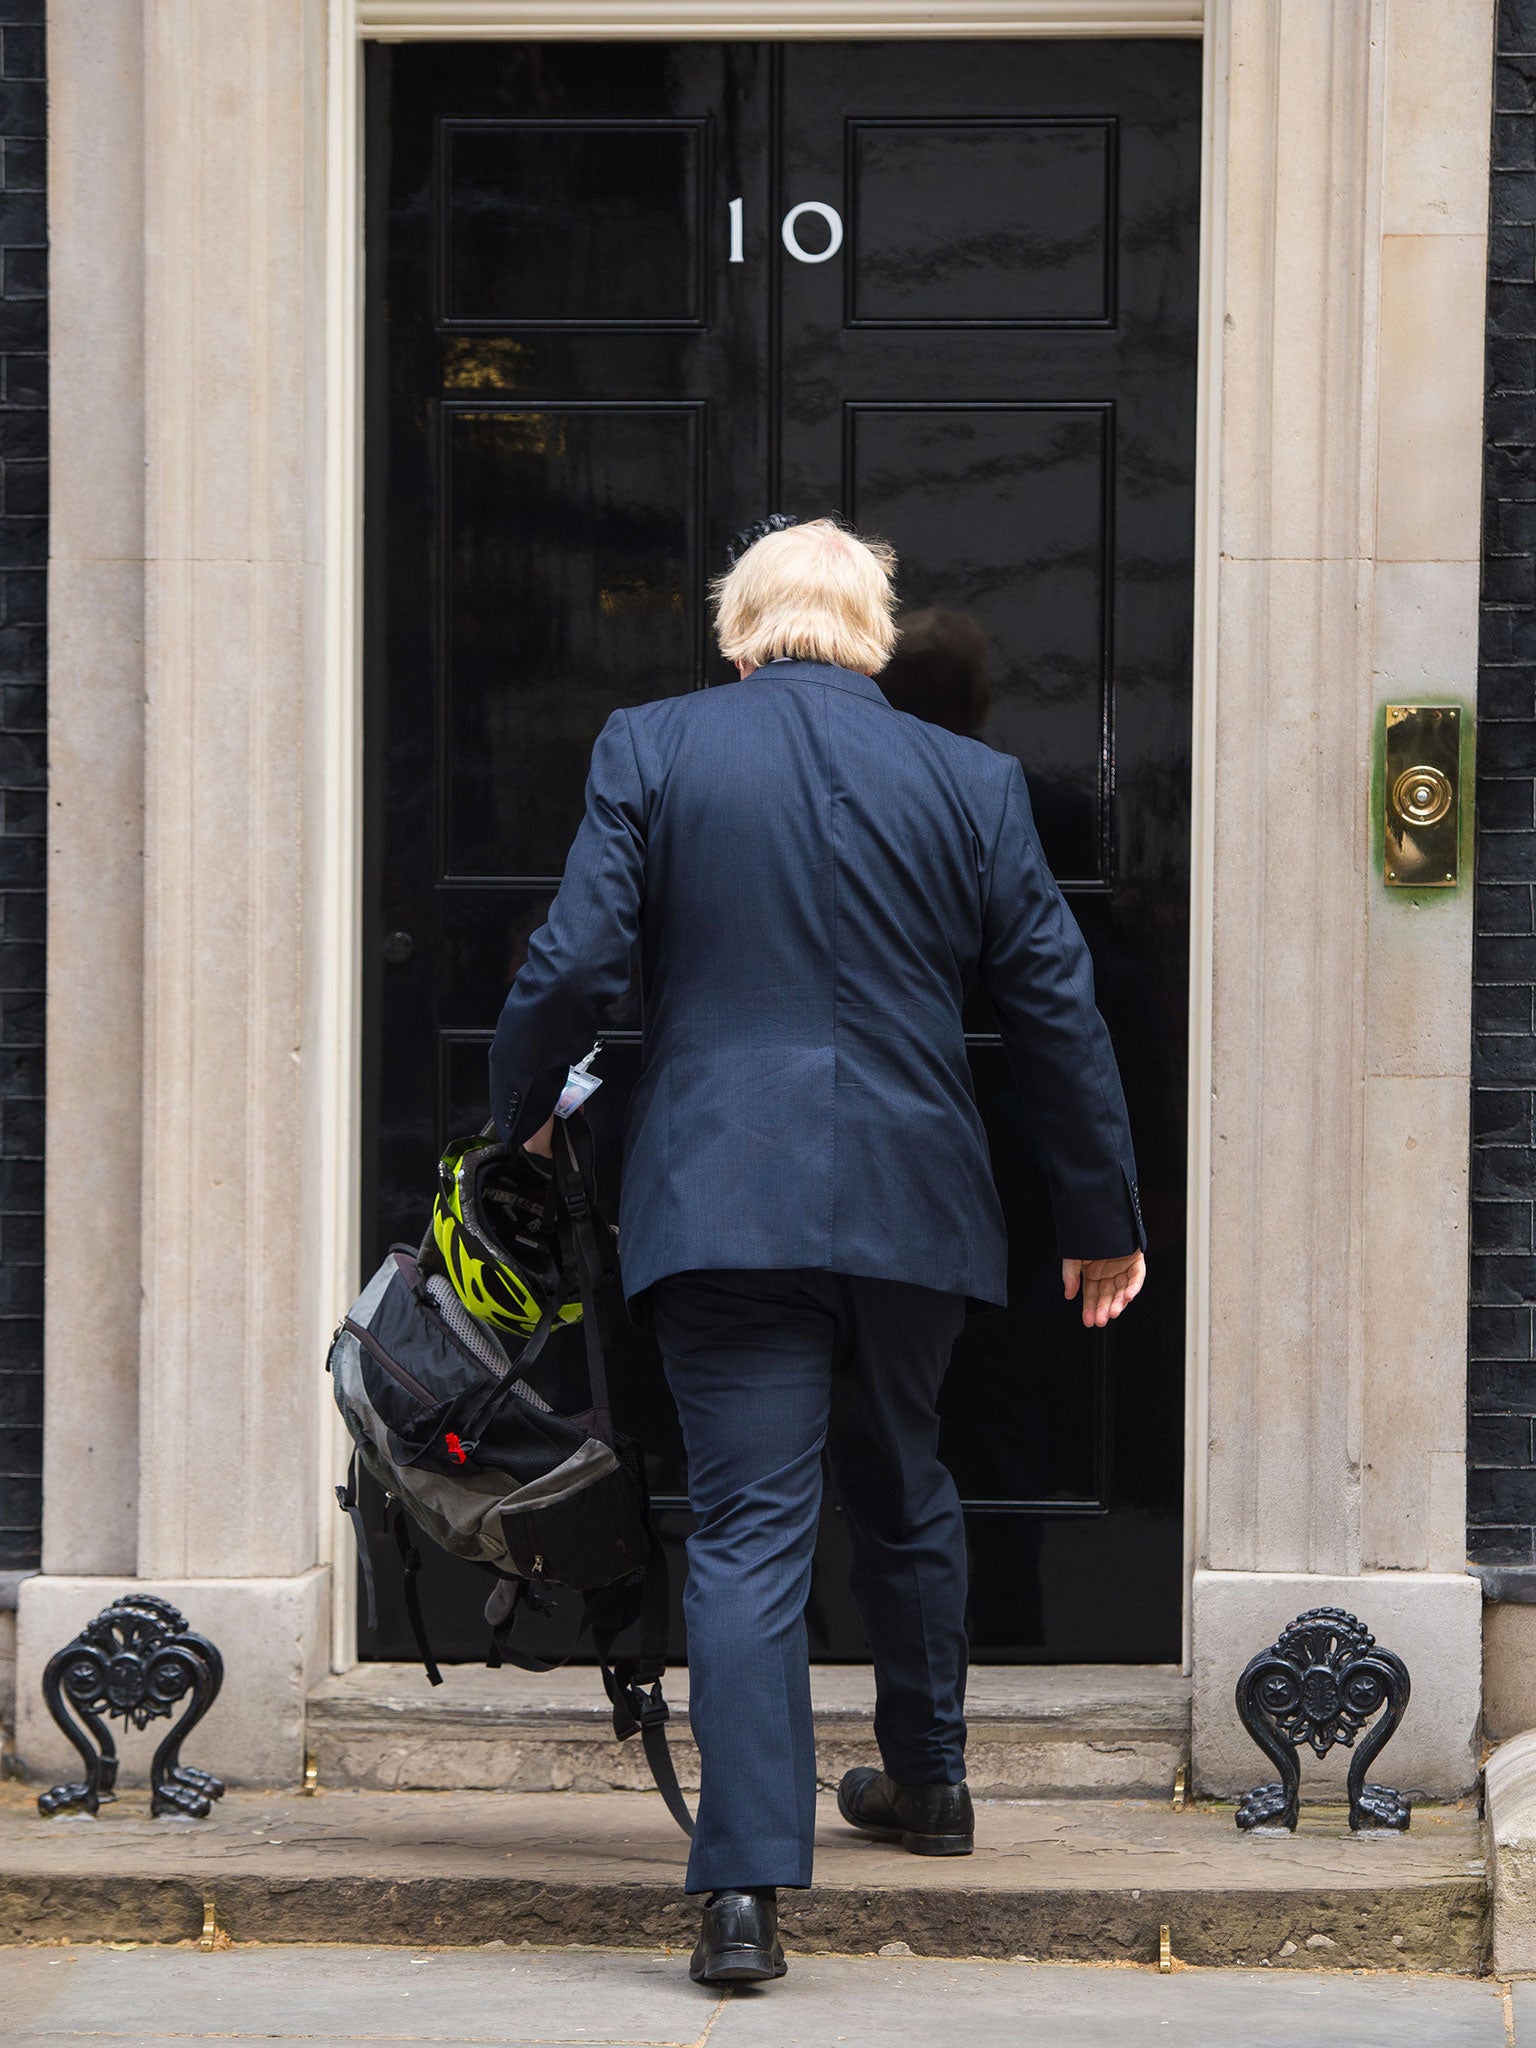 Boris Johnson arriving at No. 10